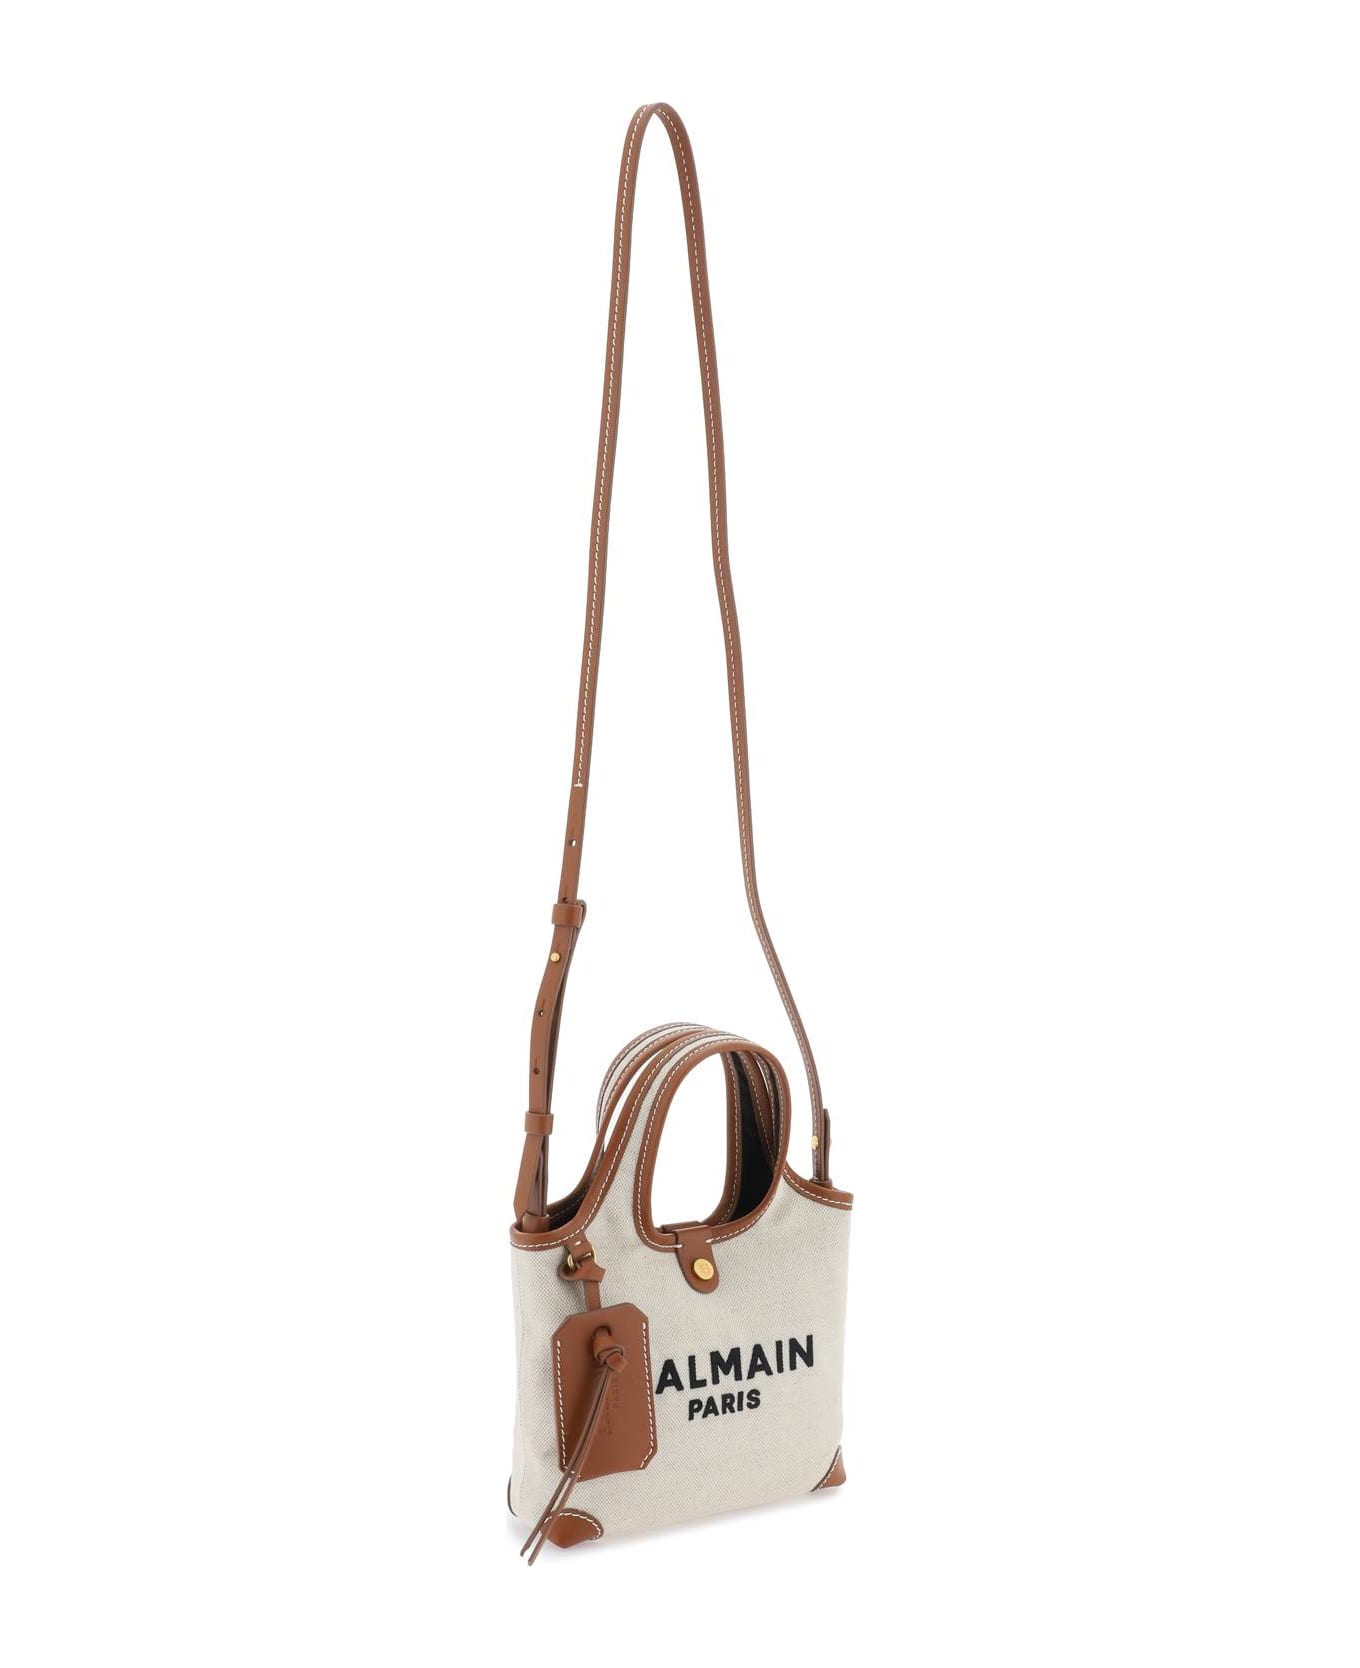 Balmain B-army Handbag - NATUREL MARRON (Brown)